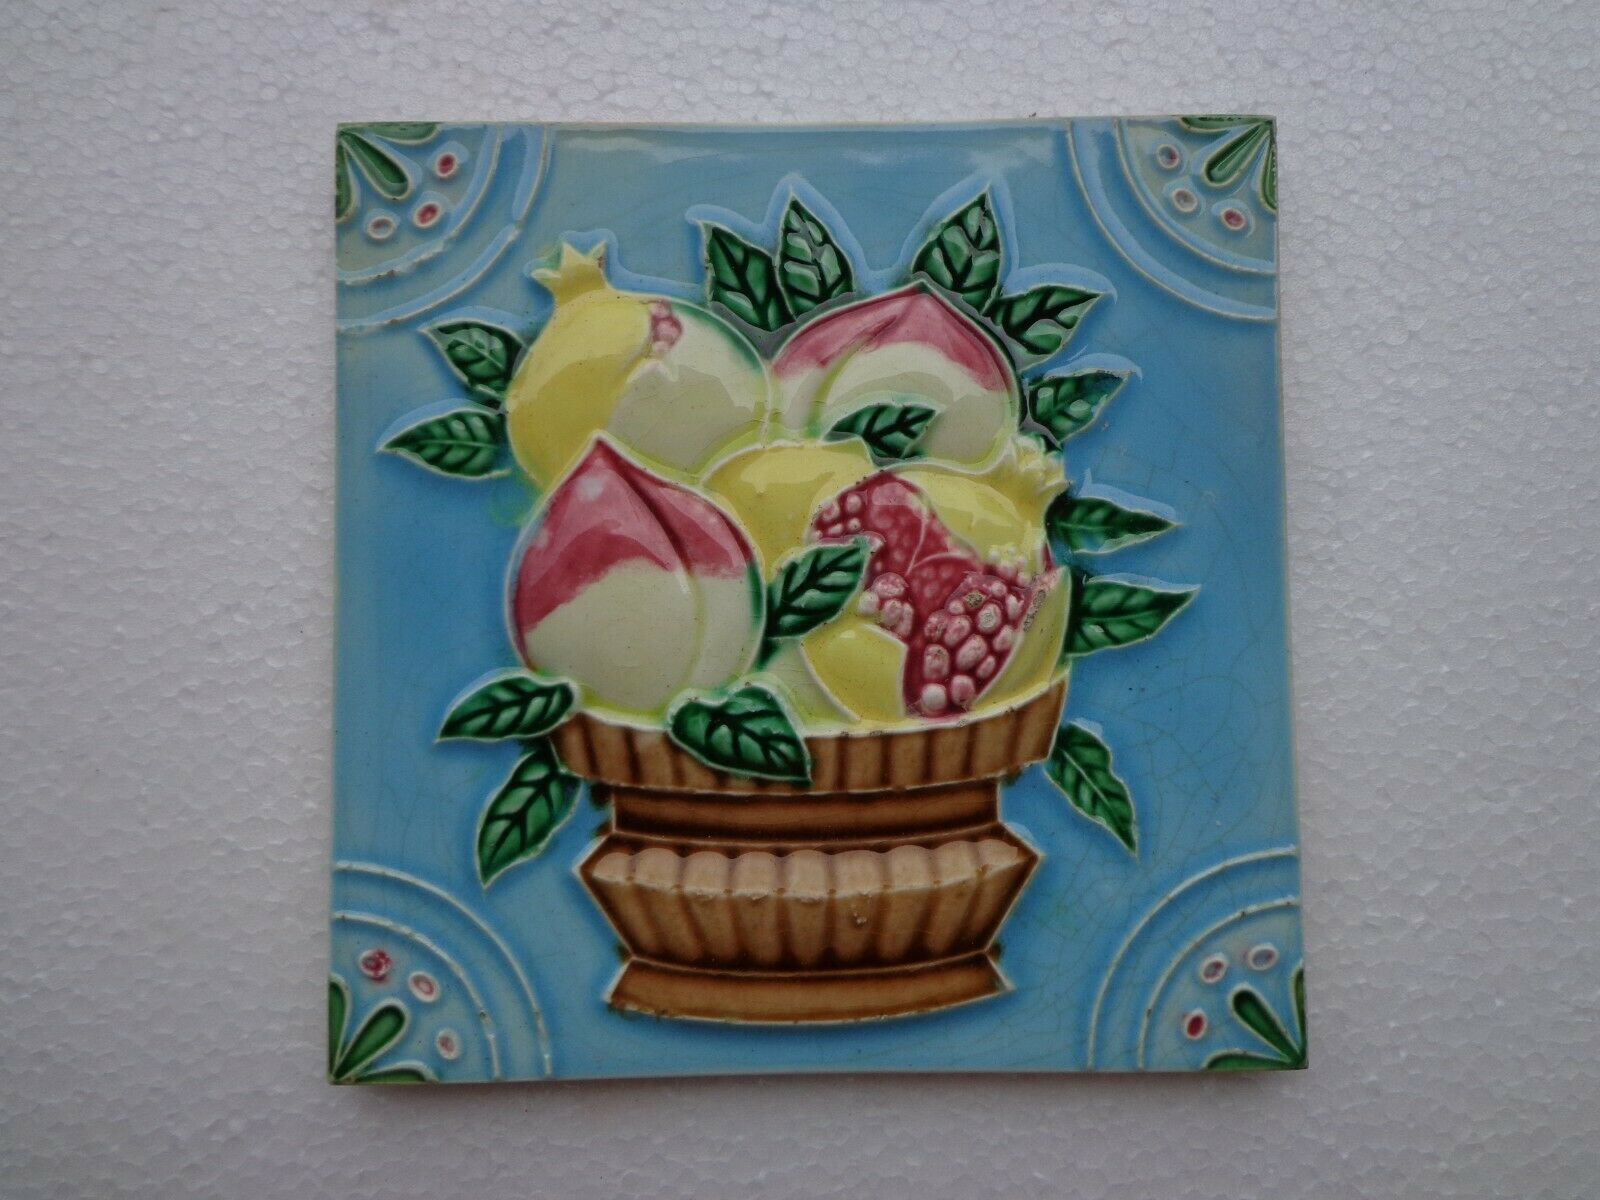 Art Decorative Fruits Design Majolica Ceramic Tiles Japan Made 1 Piece 6x6 Inch